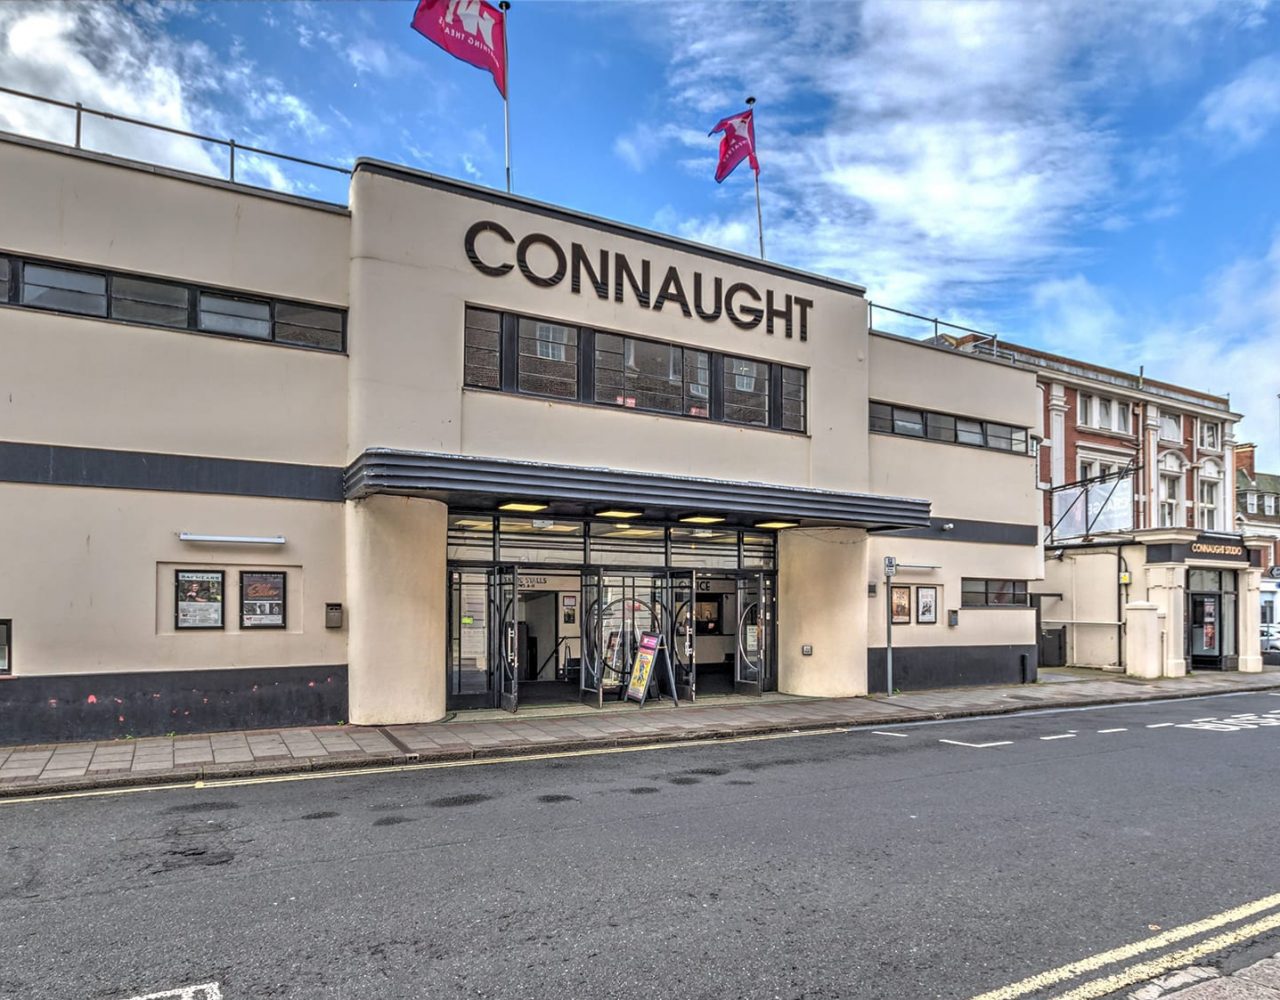 Connaught Theatre - 2020